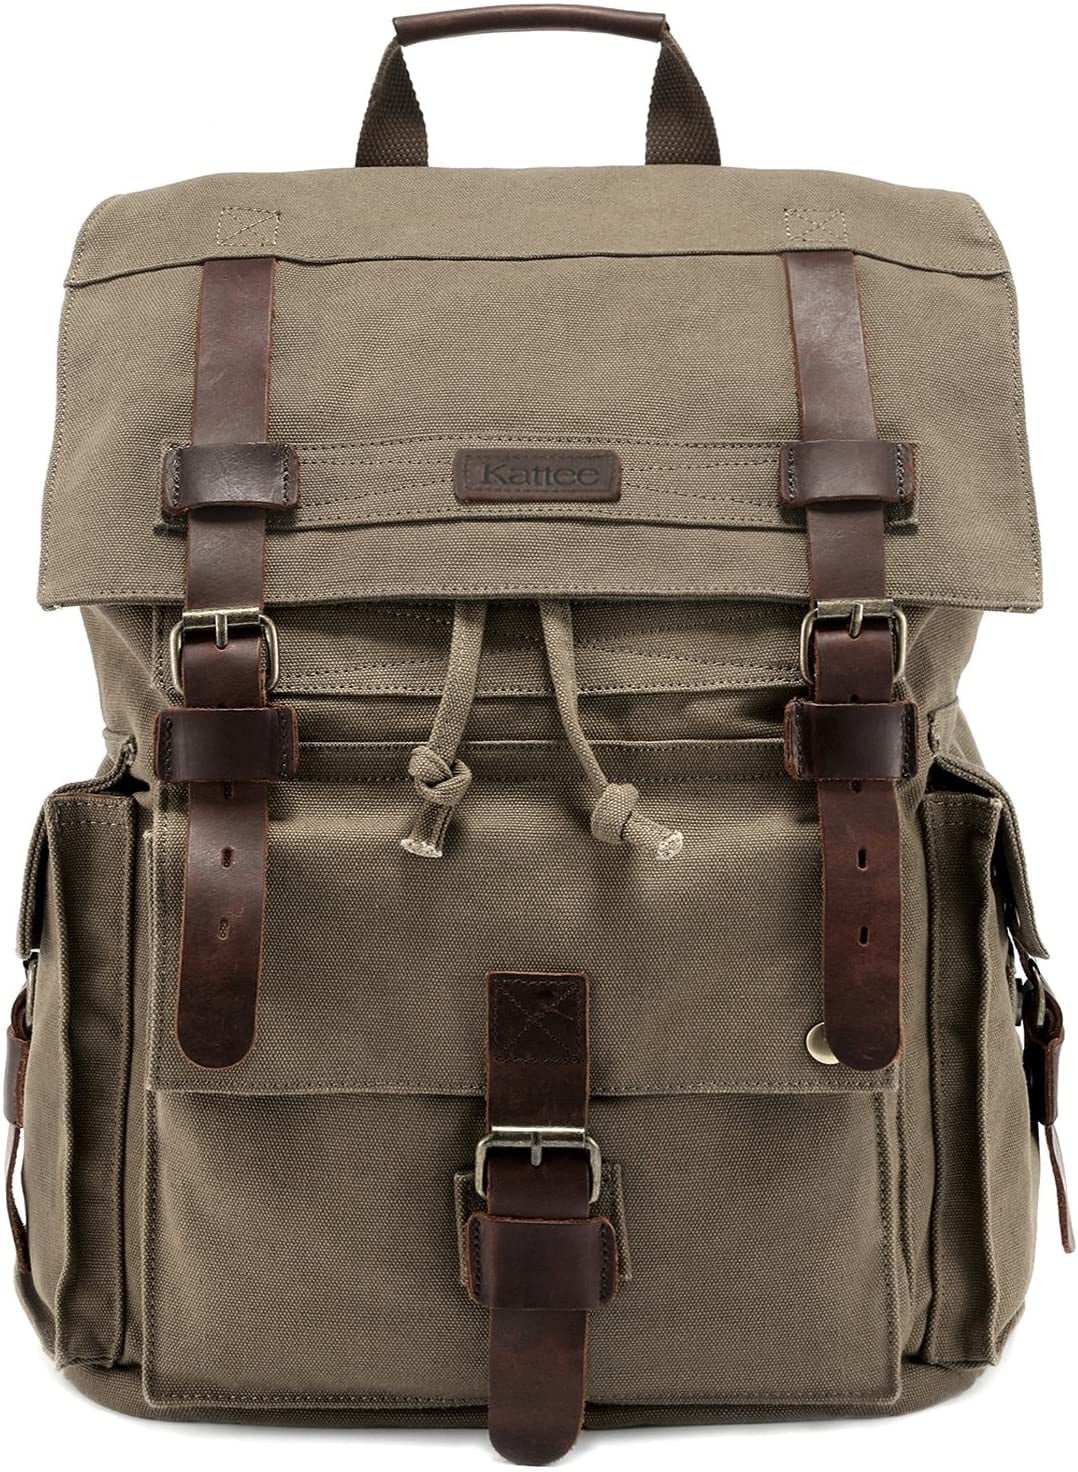 Kattee Men's Canvas Leather Hiking Travel Backpack Rucksack School Bag 